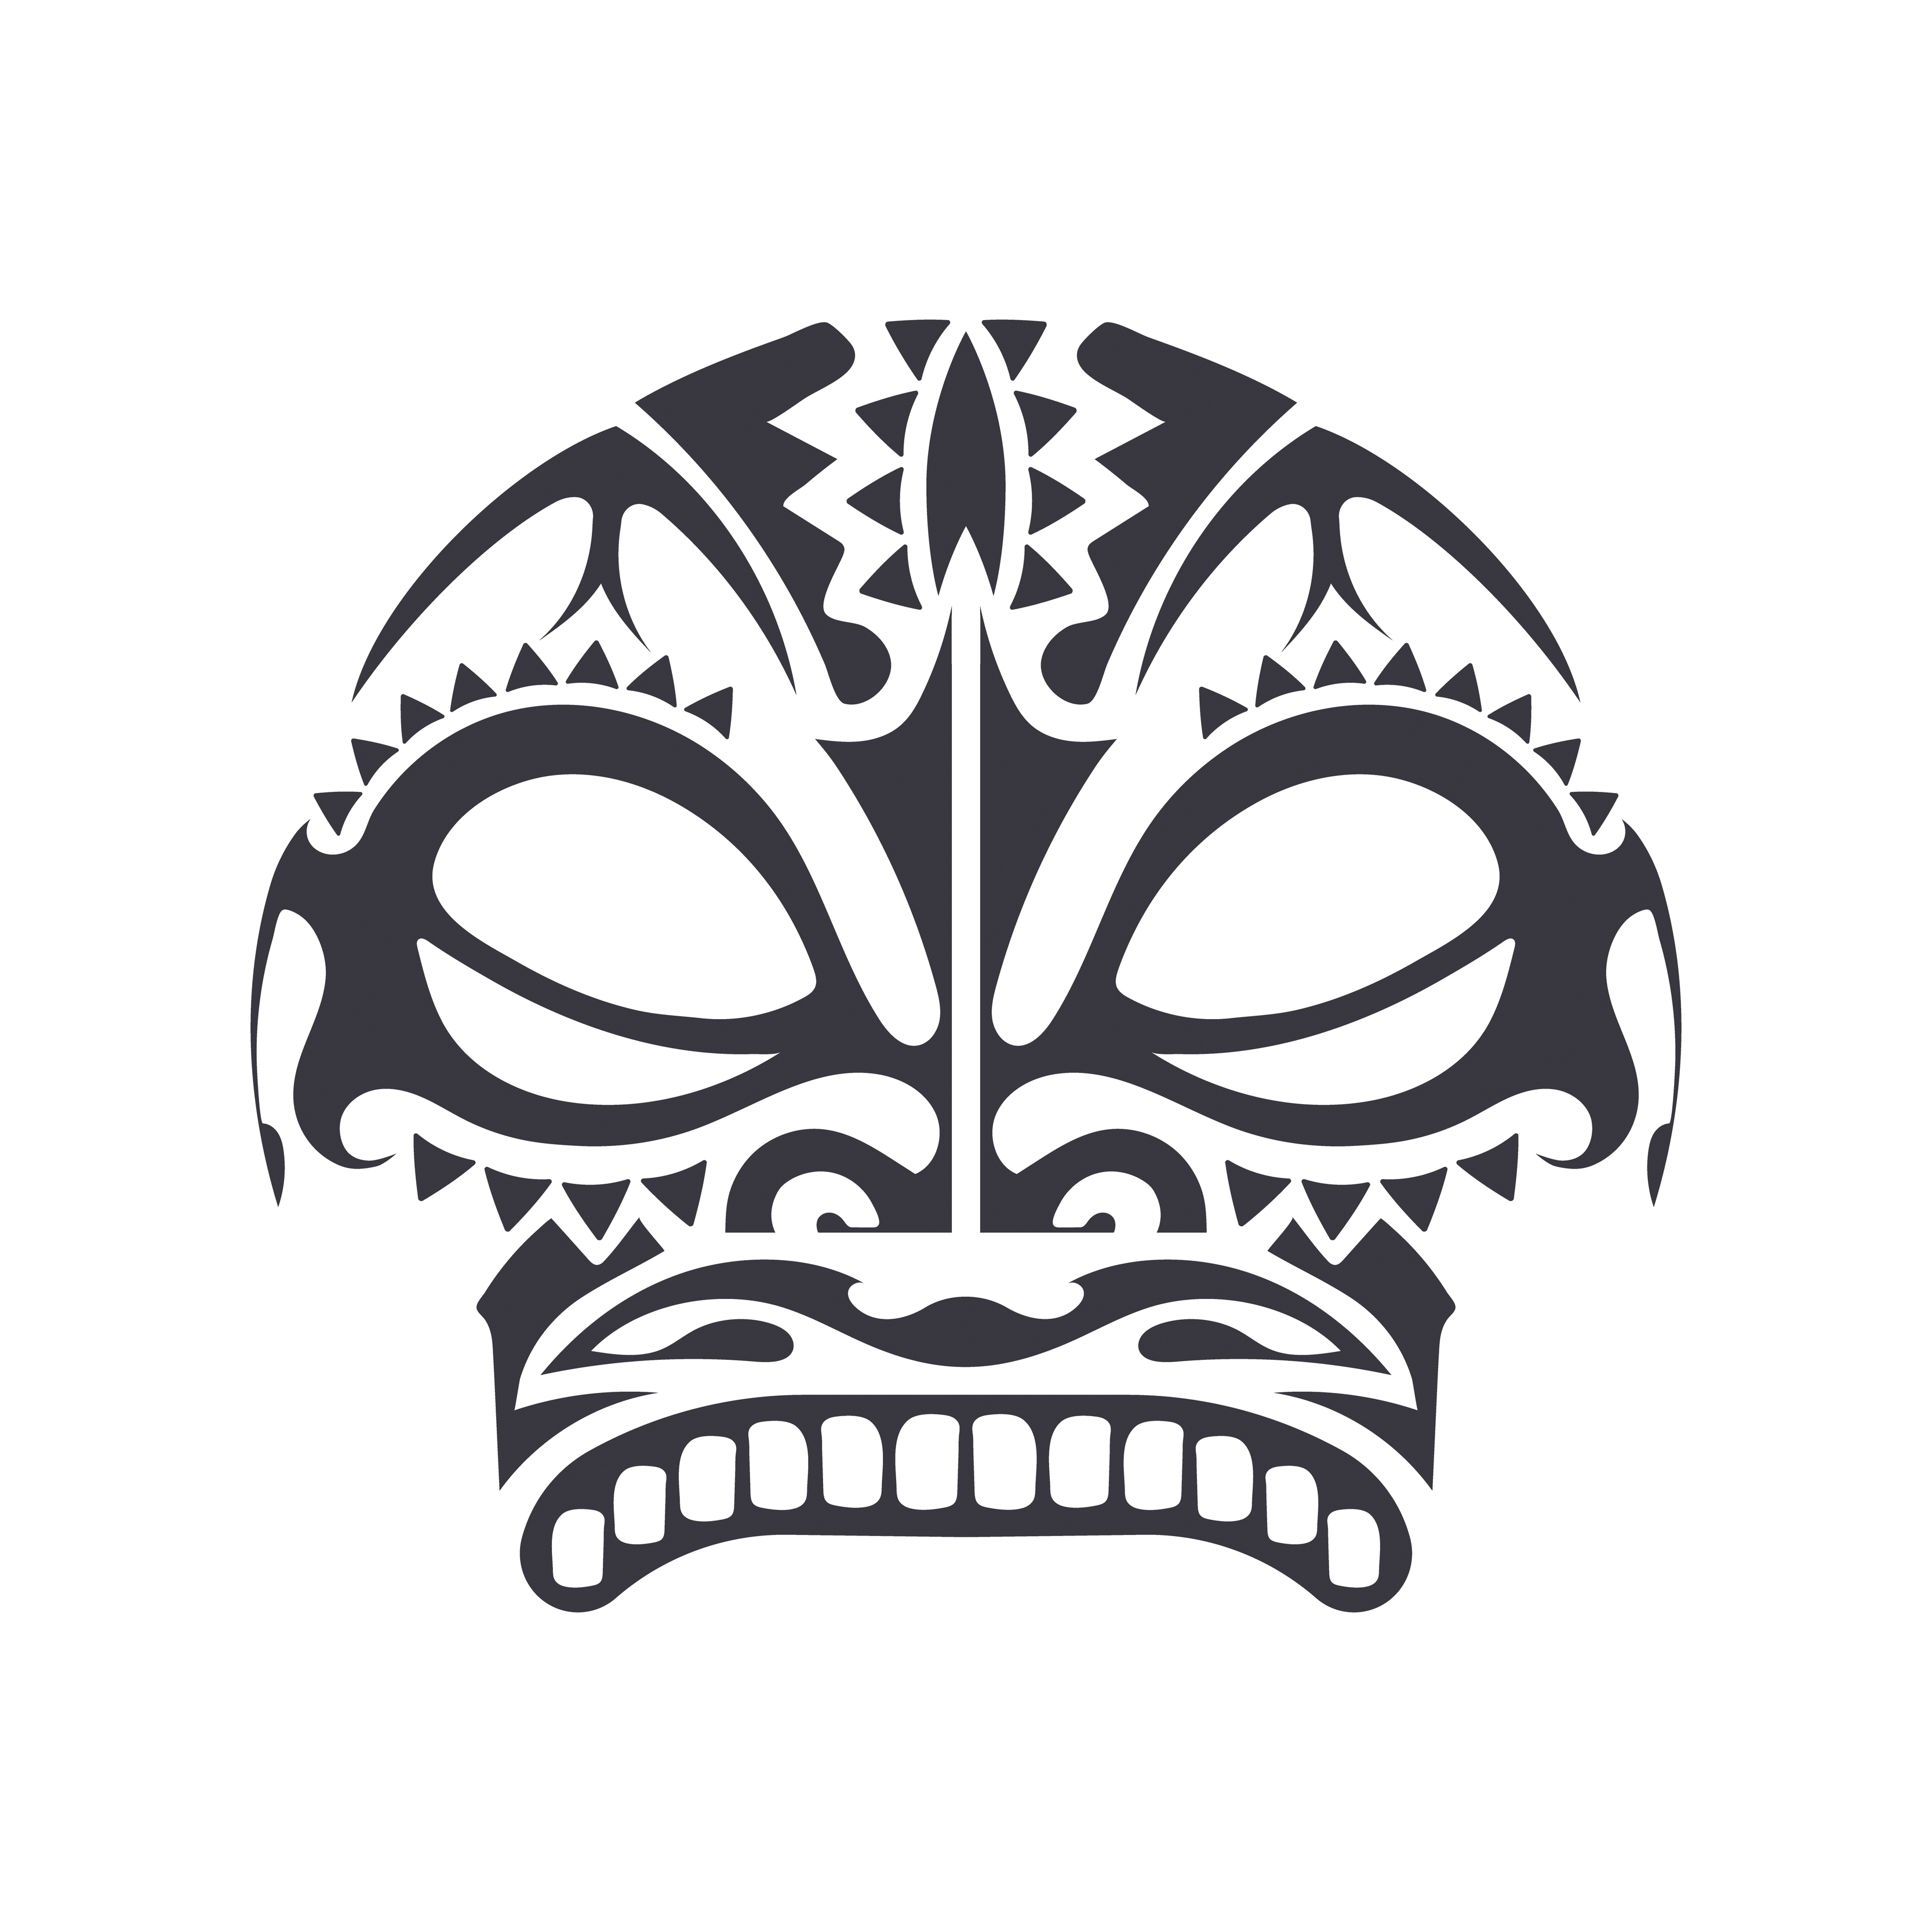 2685 Maori Face Tattoo Images Stock Photos  Vectors  Shutterstock